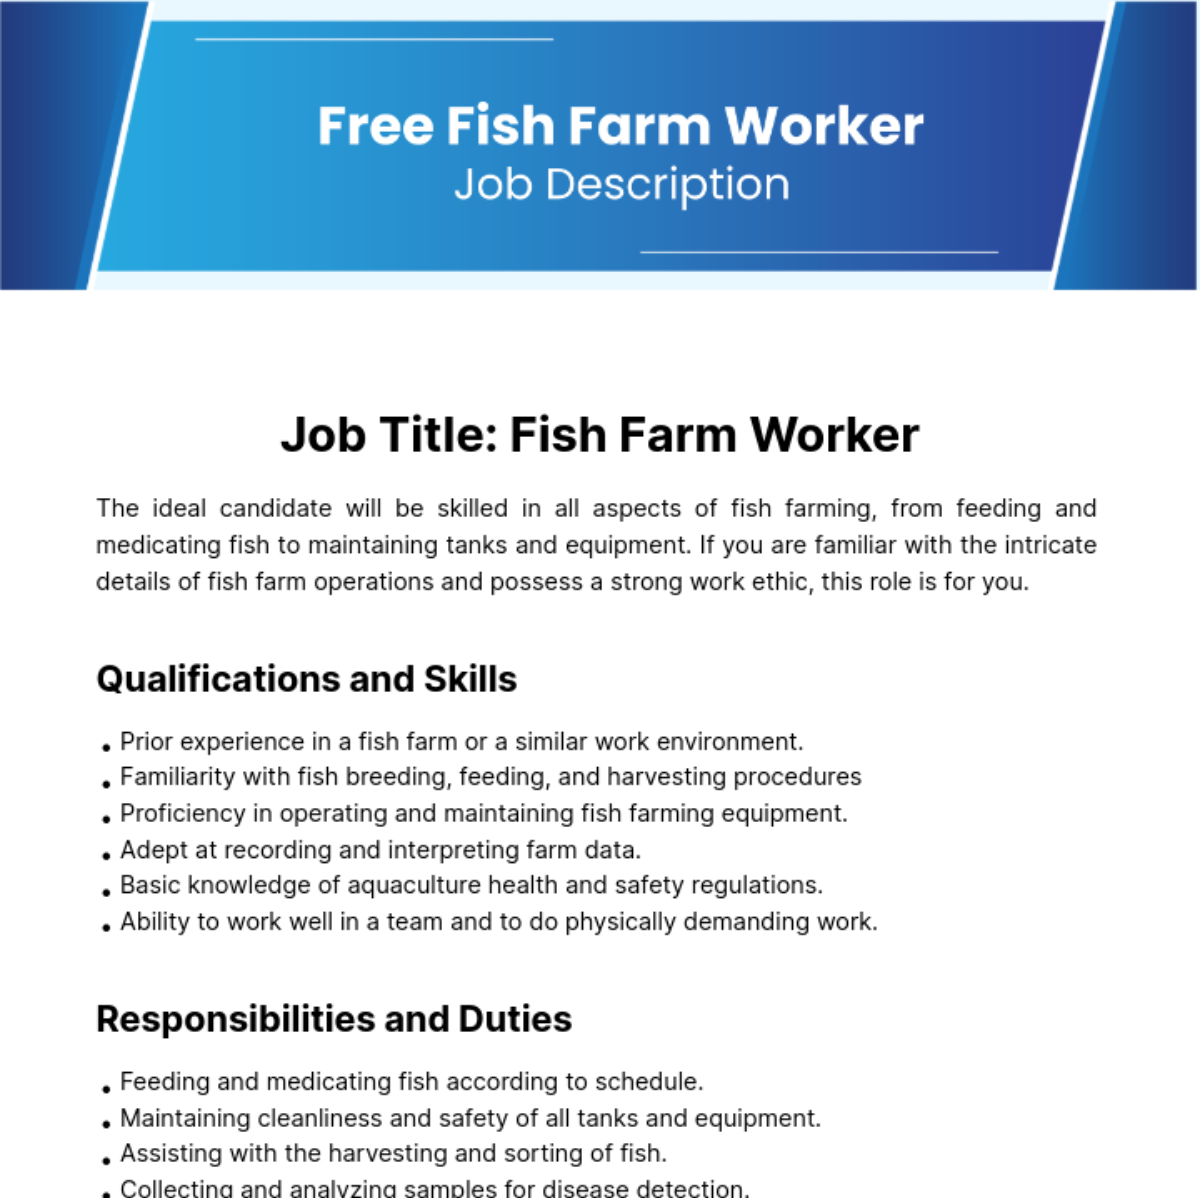 Free Fish Farm Worker Job Description Template